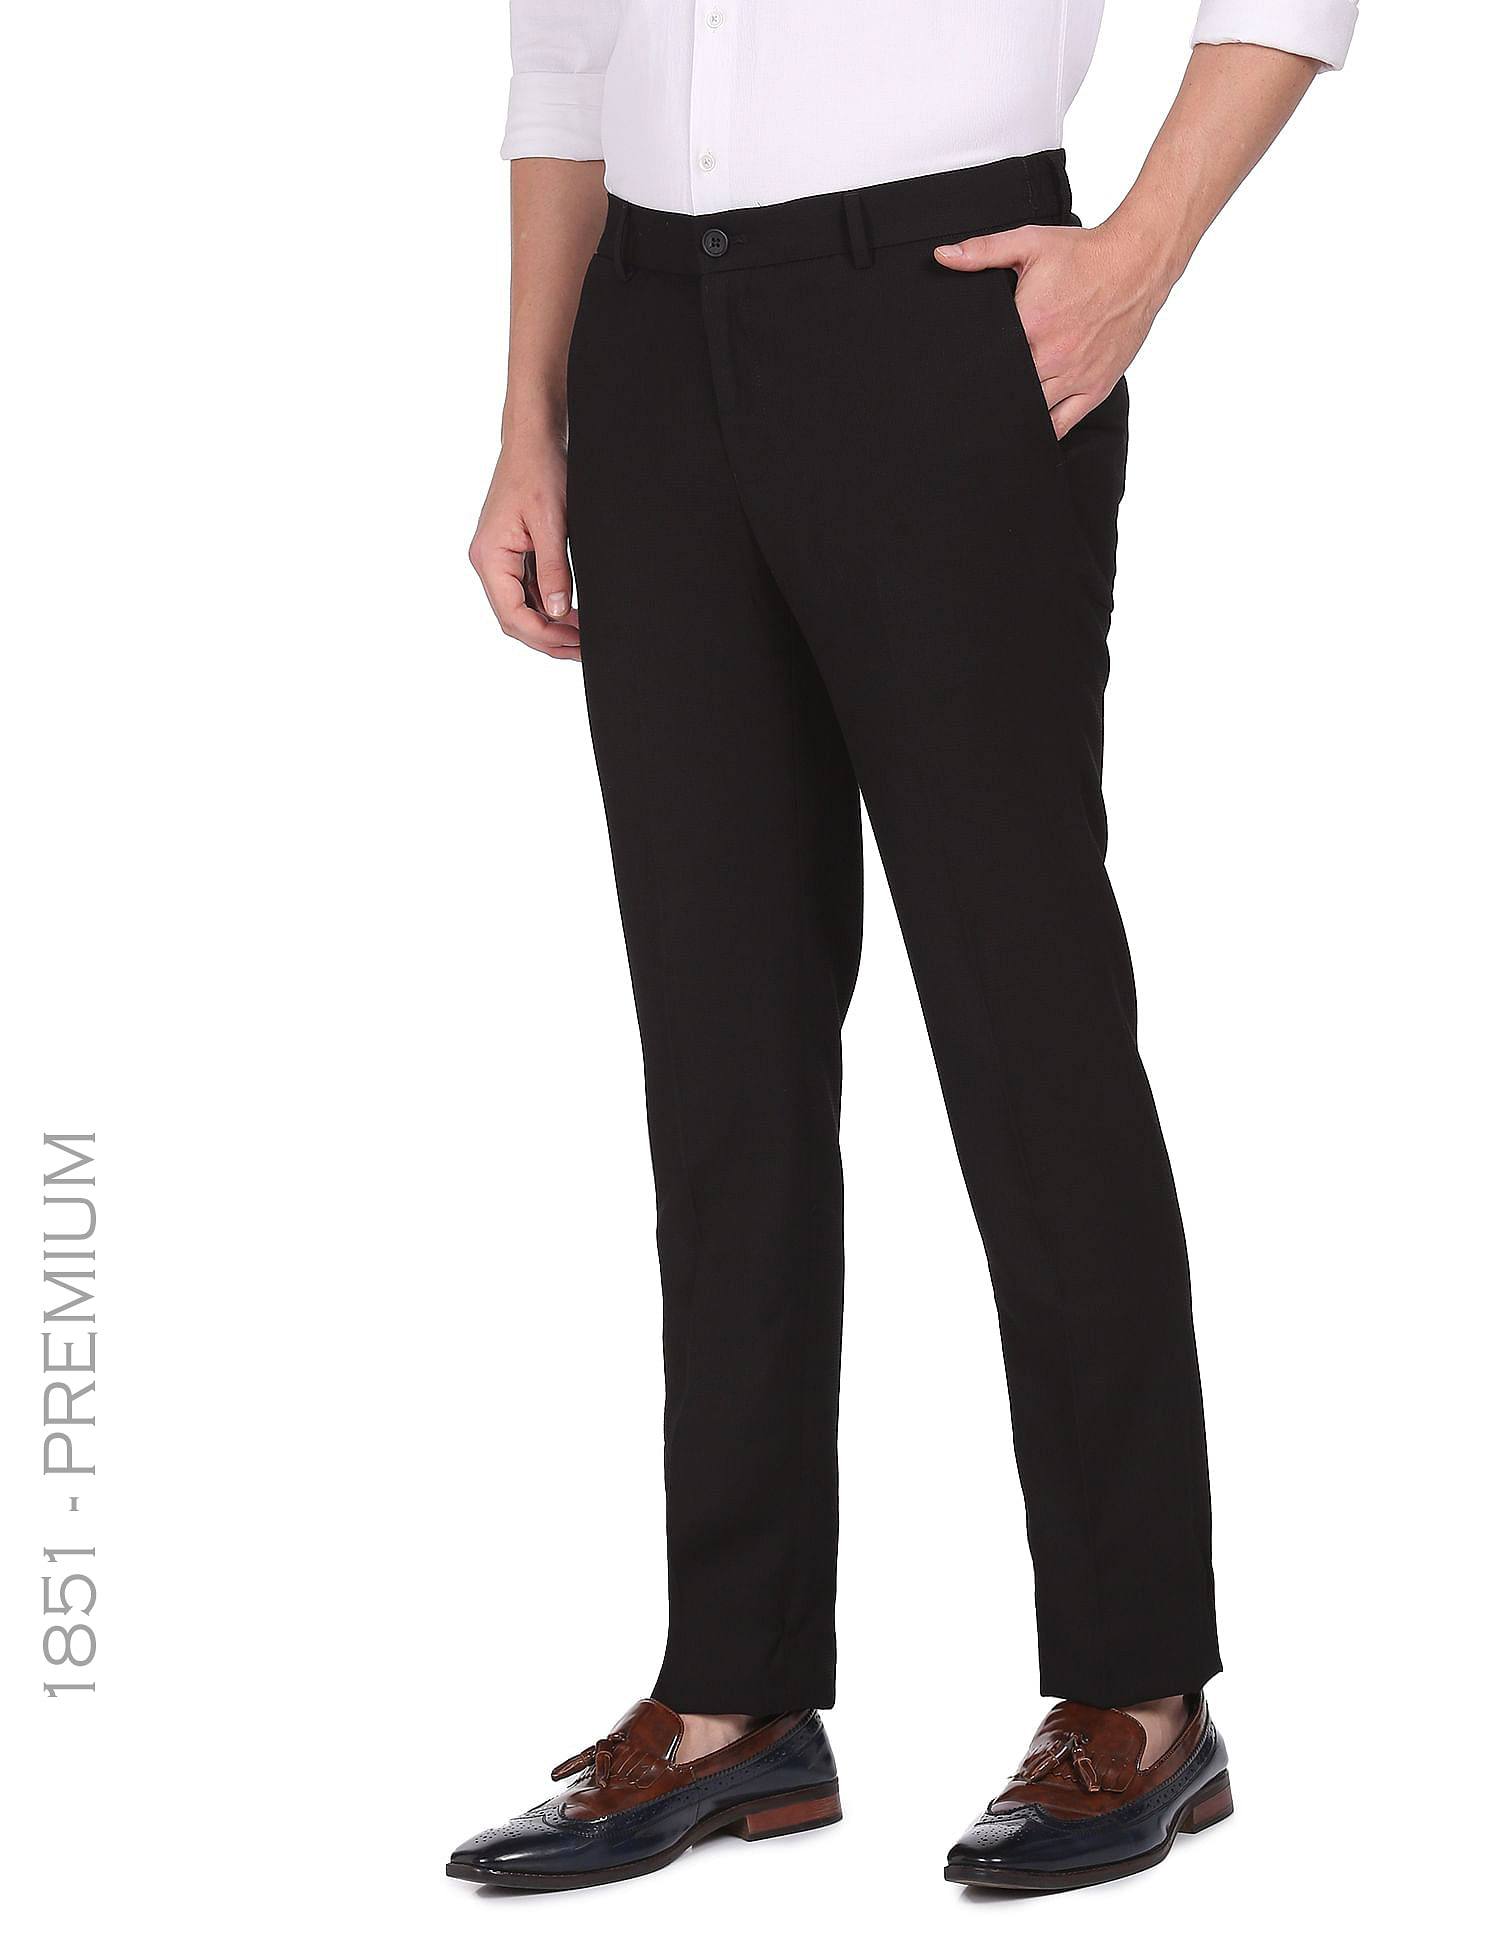 Buy Men Navy Check Slim Fit Formal Trousers Online  792255  Peter England